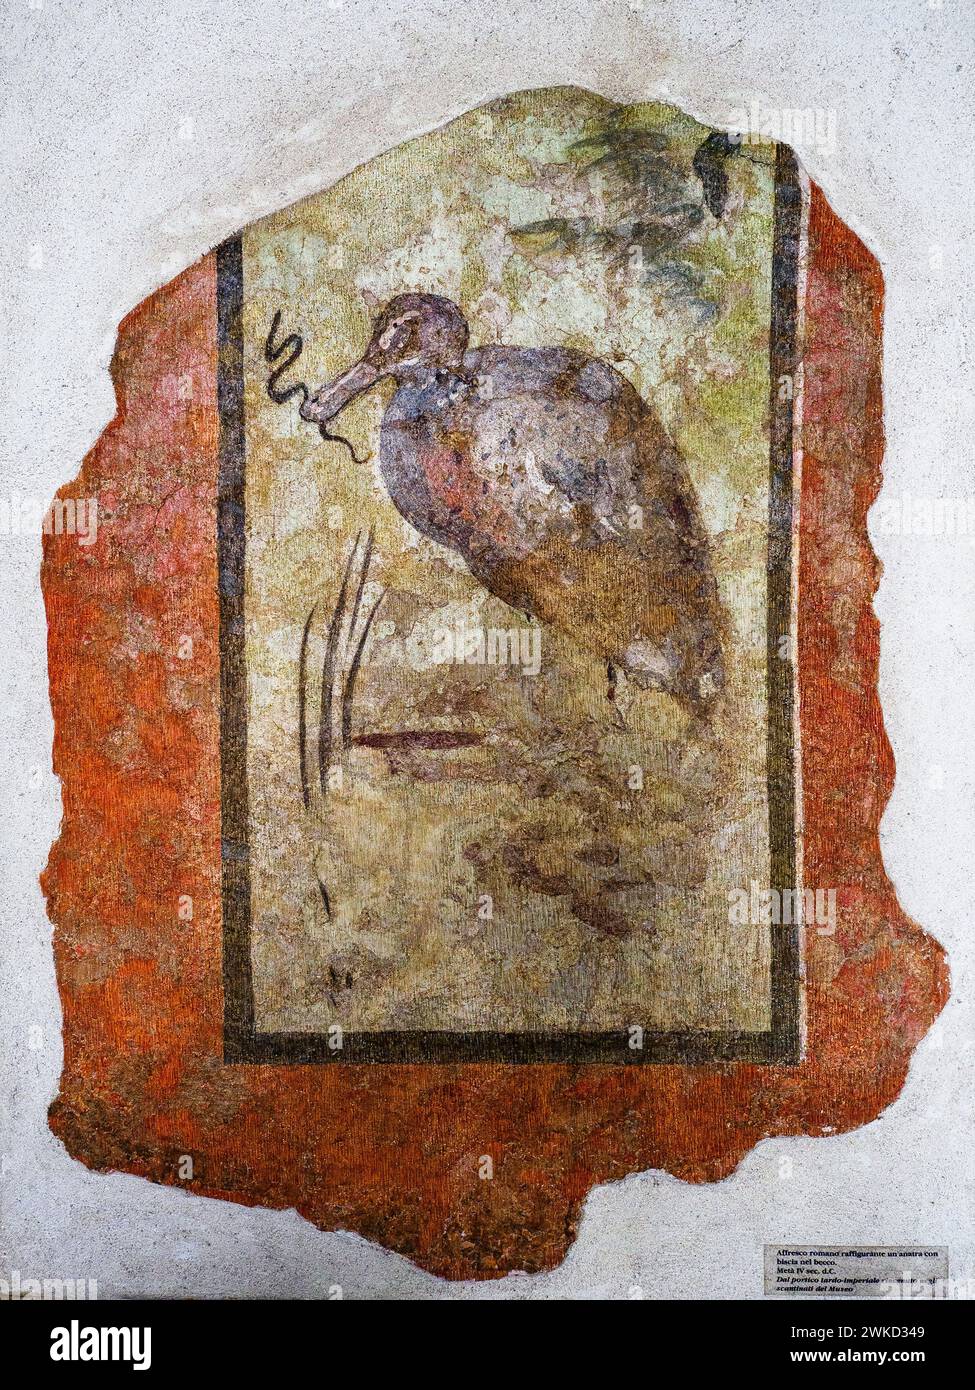 Roman fresco depicting a duck with a snake in its beak - Mid 4th century AD - Museo di Scultura Antica Giovanni Barracco, Rome, Italy Stock Photo